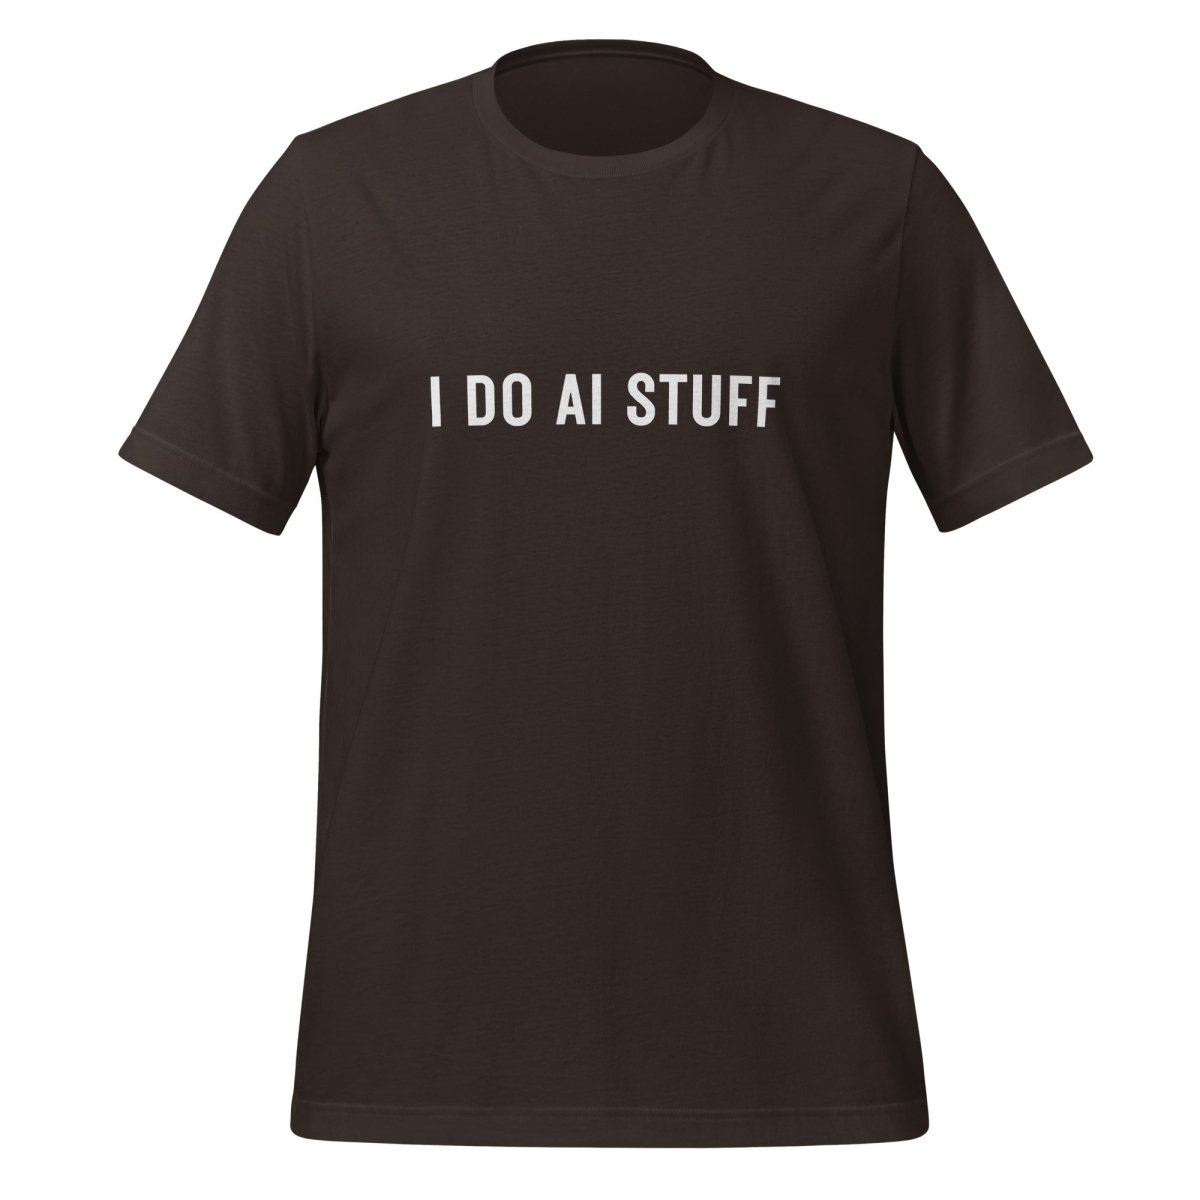 I Do AI Stuff T - Shirt 2 (unisex) - Brown - AI Store